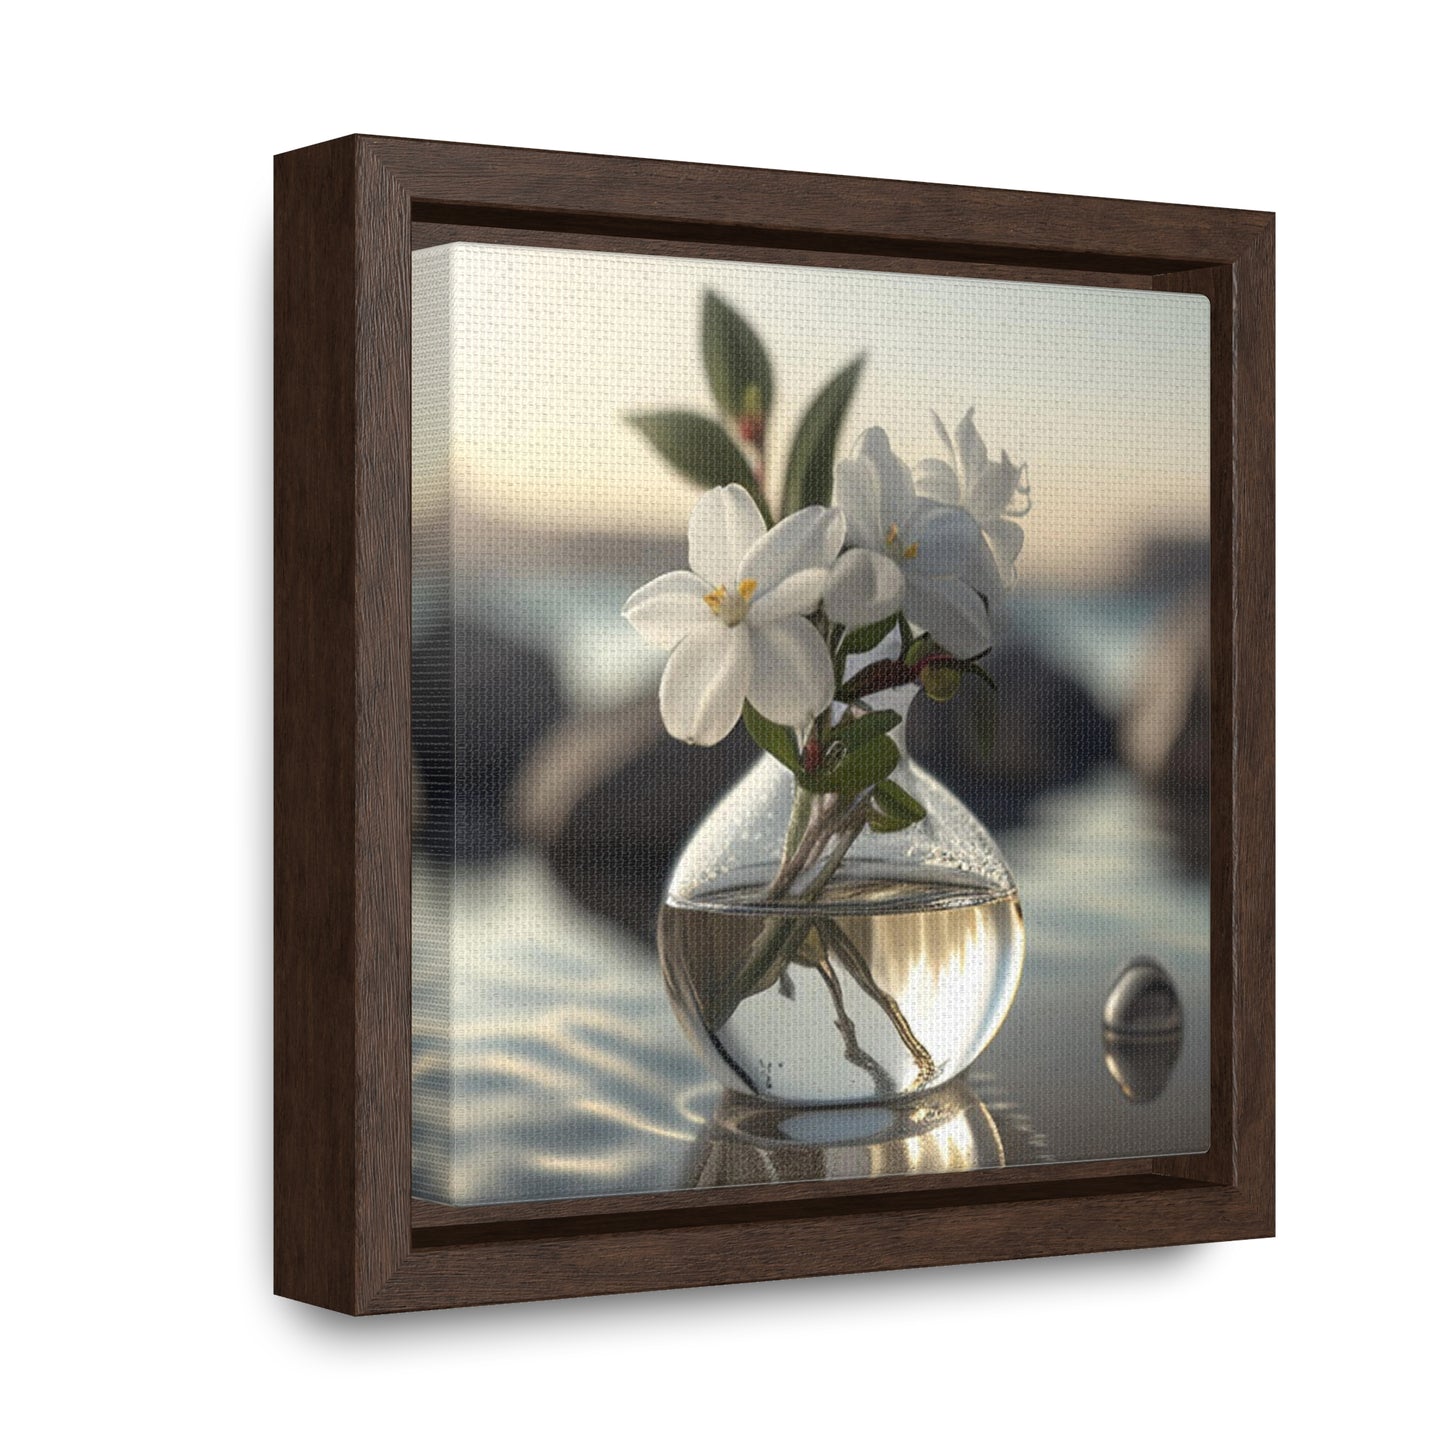 Gallery Canvas Wraps, Square Frame Jasmine glass vase 1